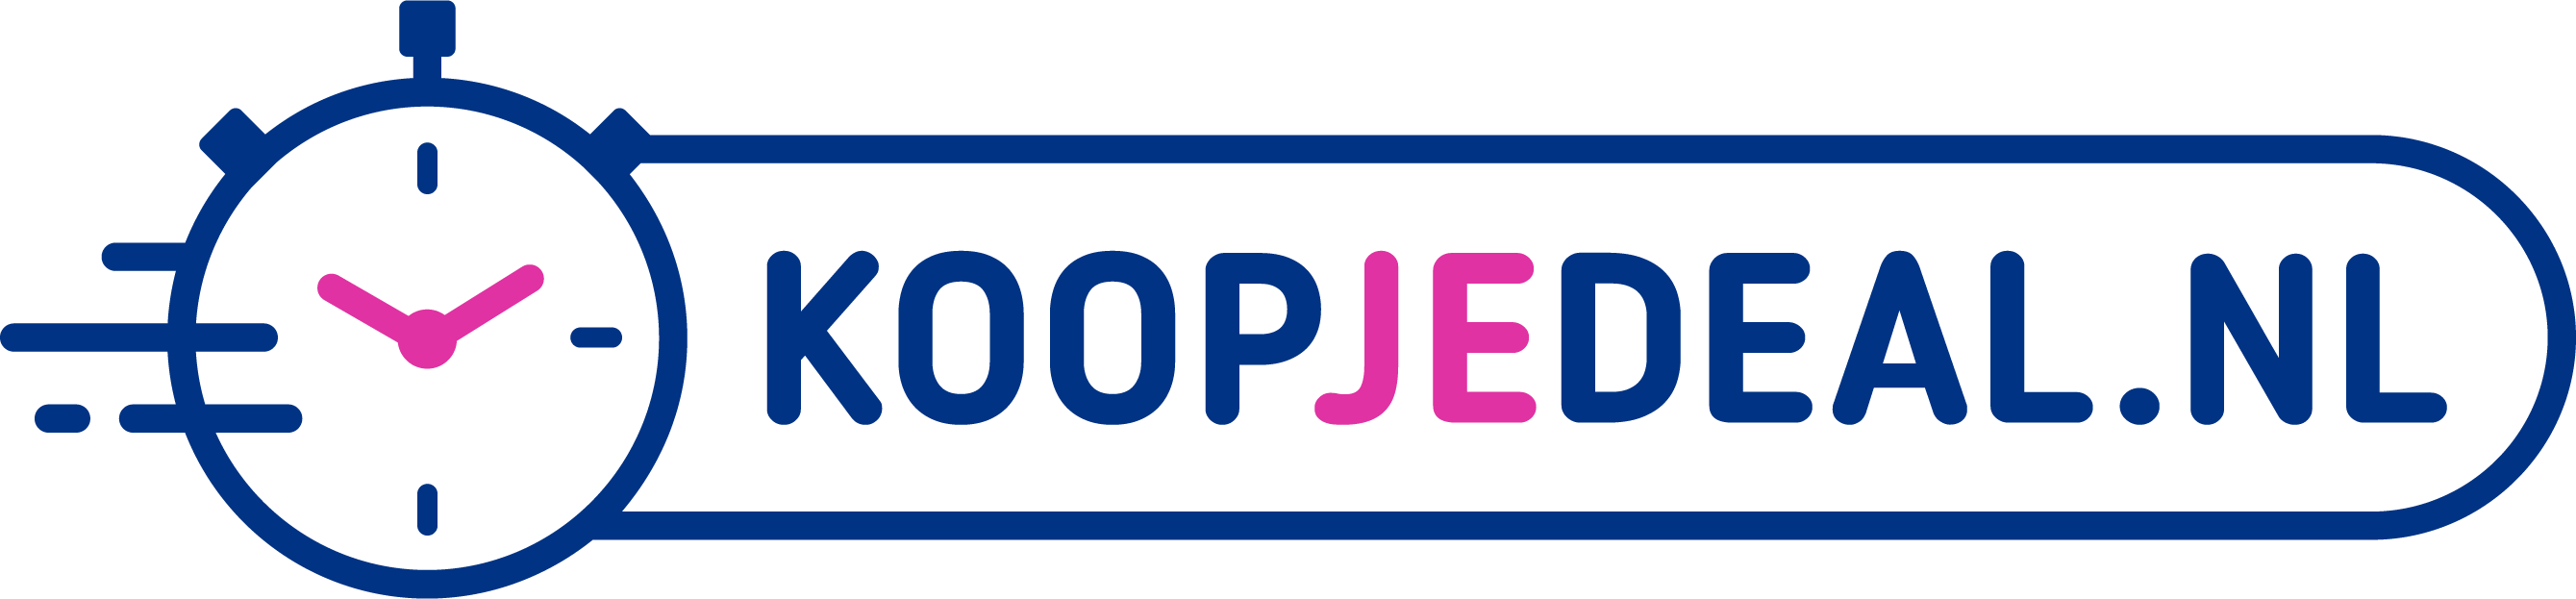 Koopjedeal logo